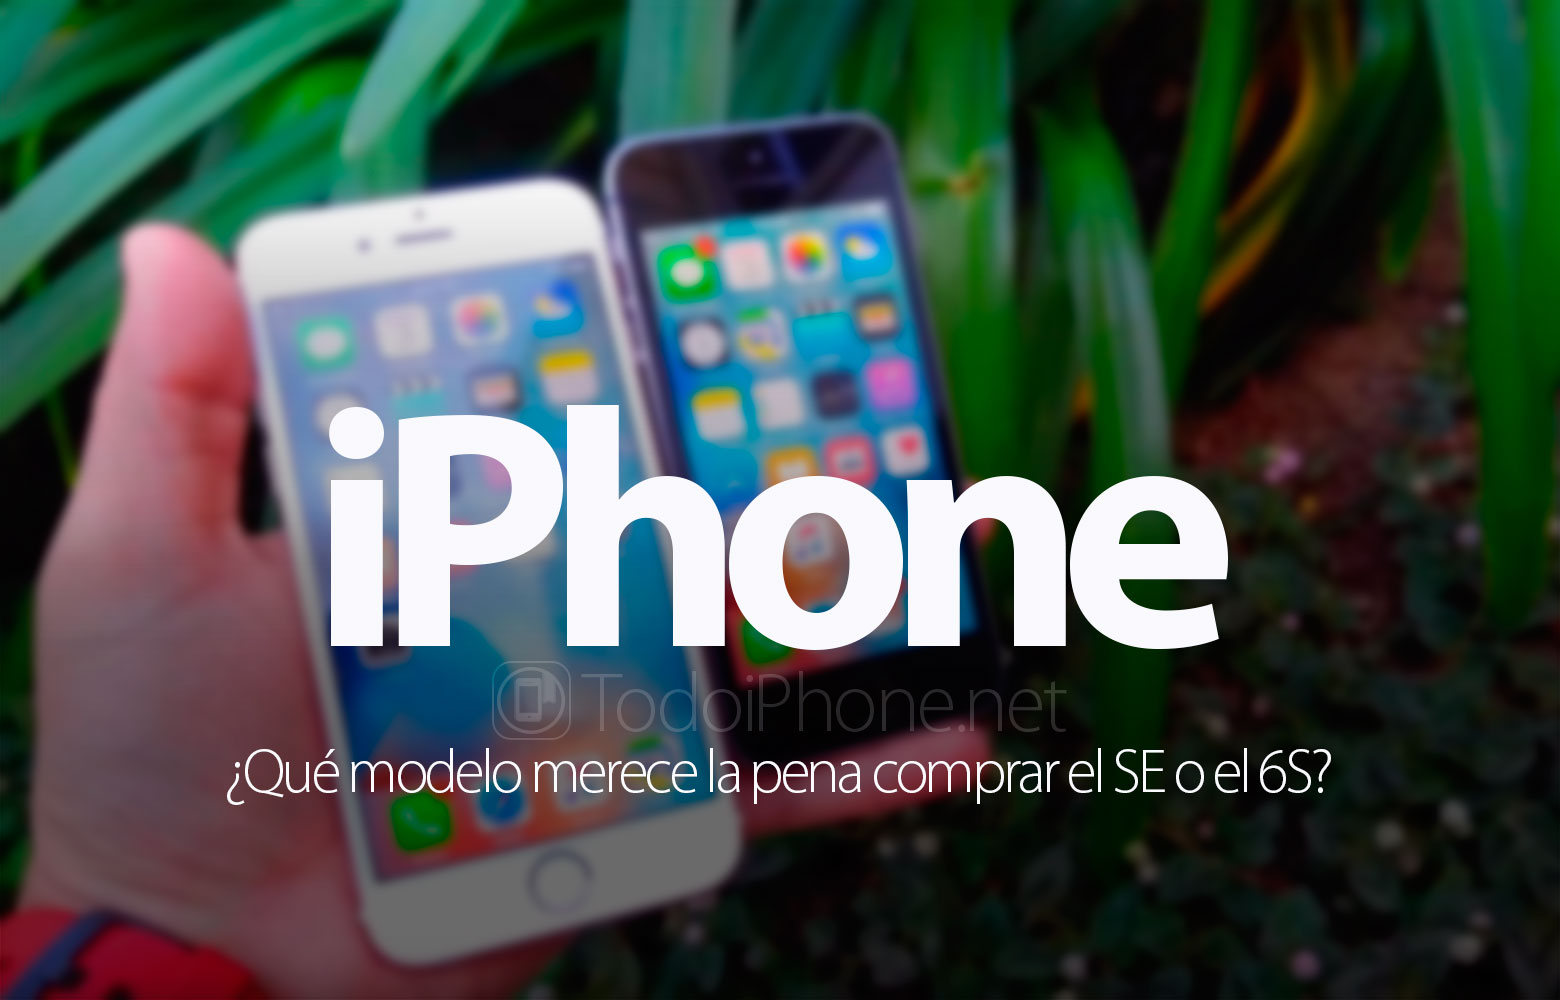 iphone-se-vs-iphone-6s-cual-comprar